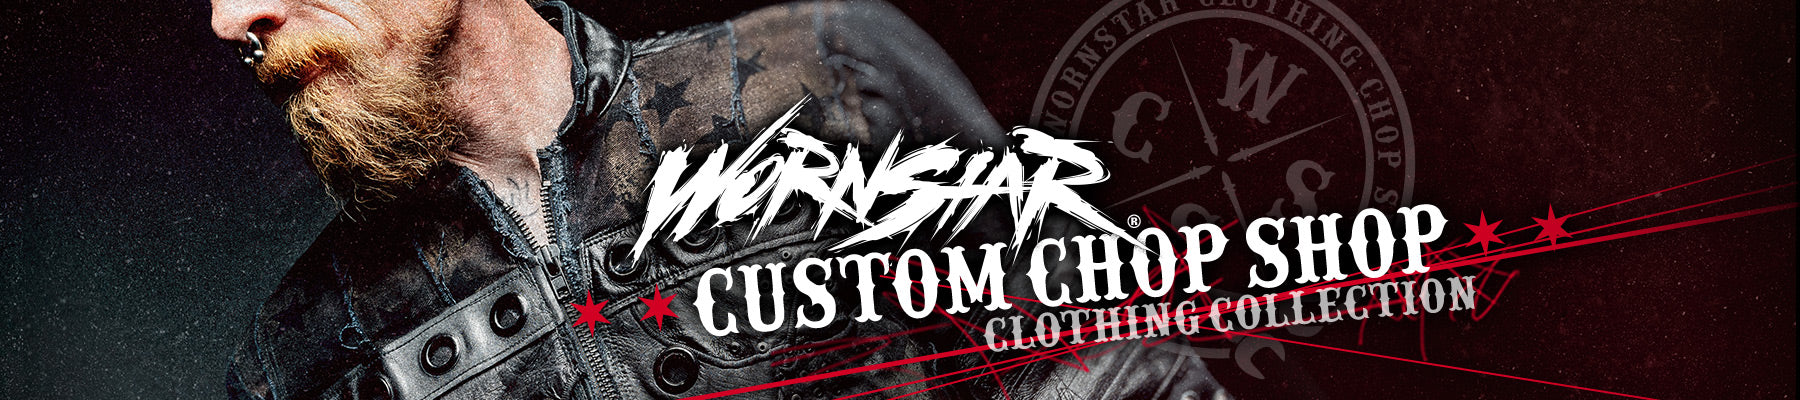 Custom Chop Shop Clothing